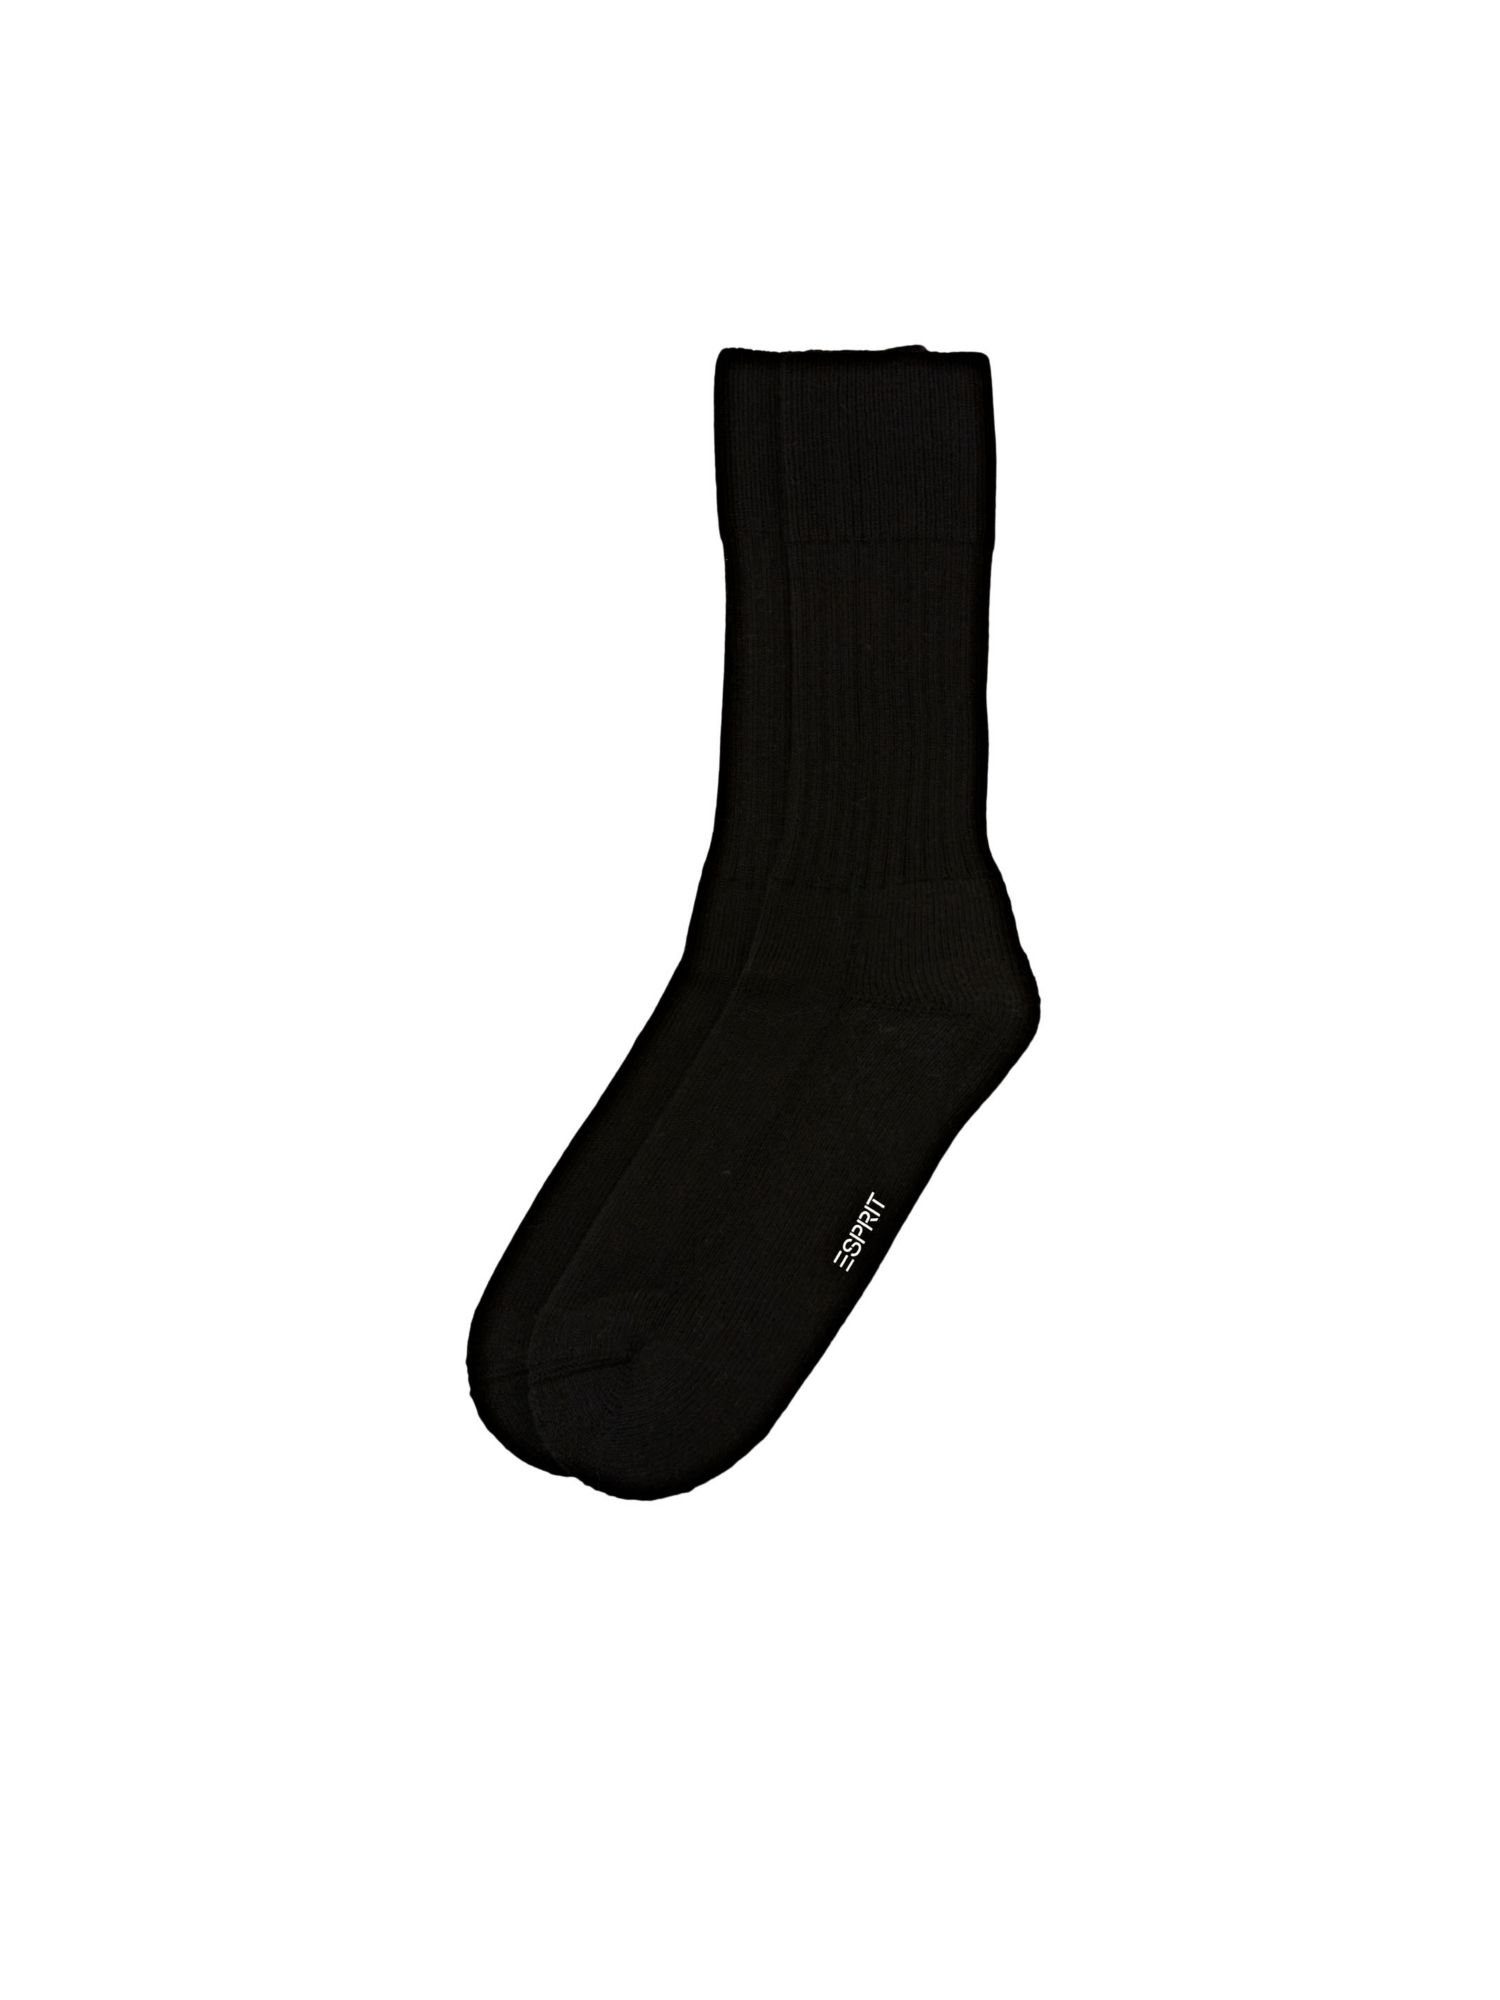 Esprit Socken Socken aus grobem Rippstrick